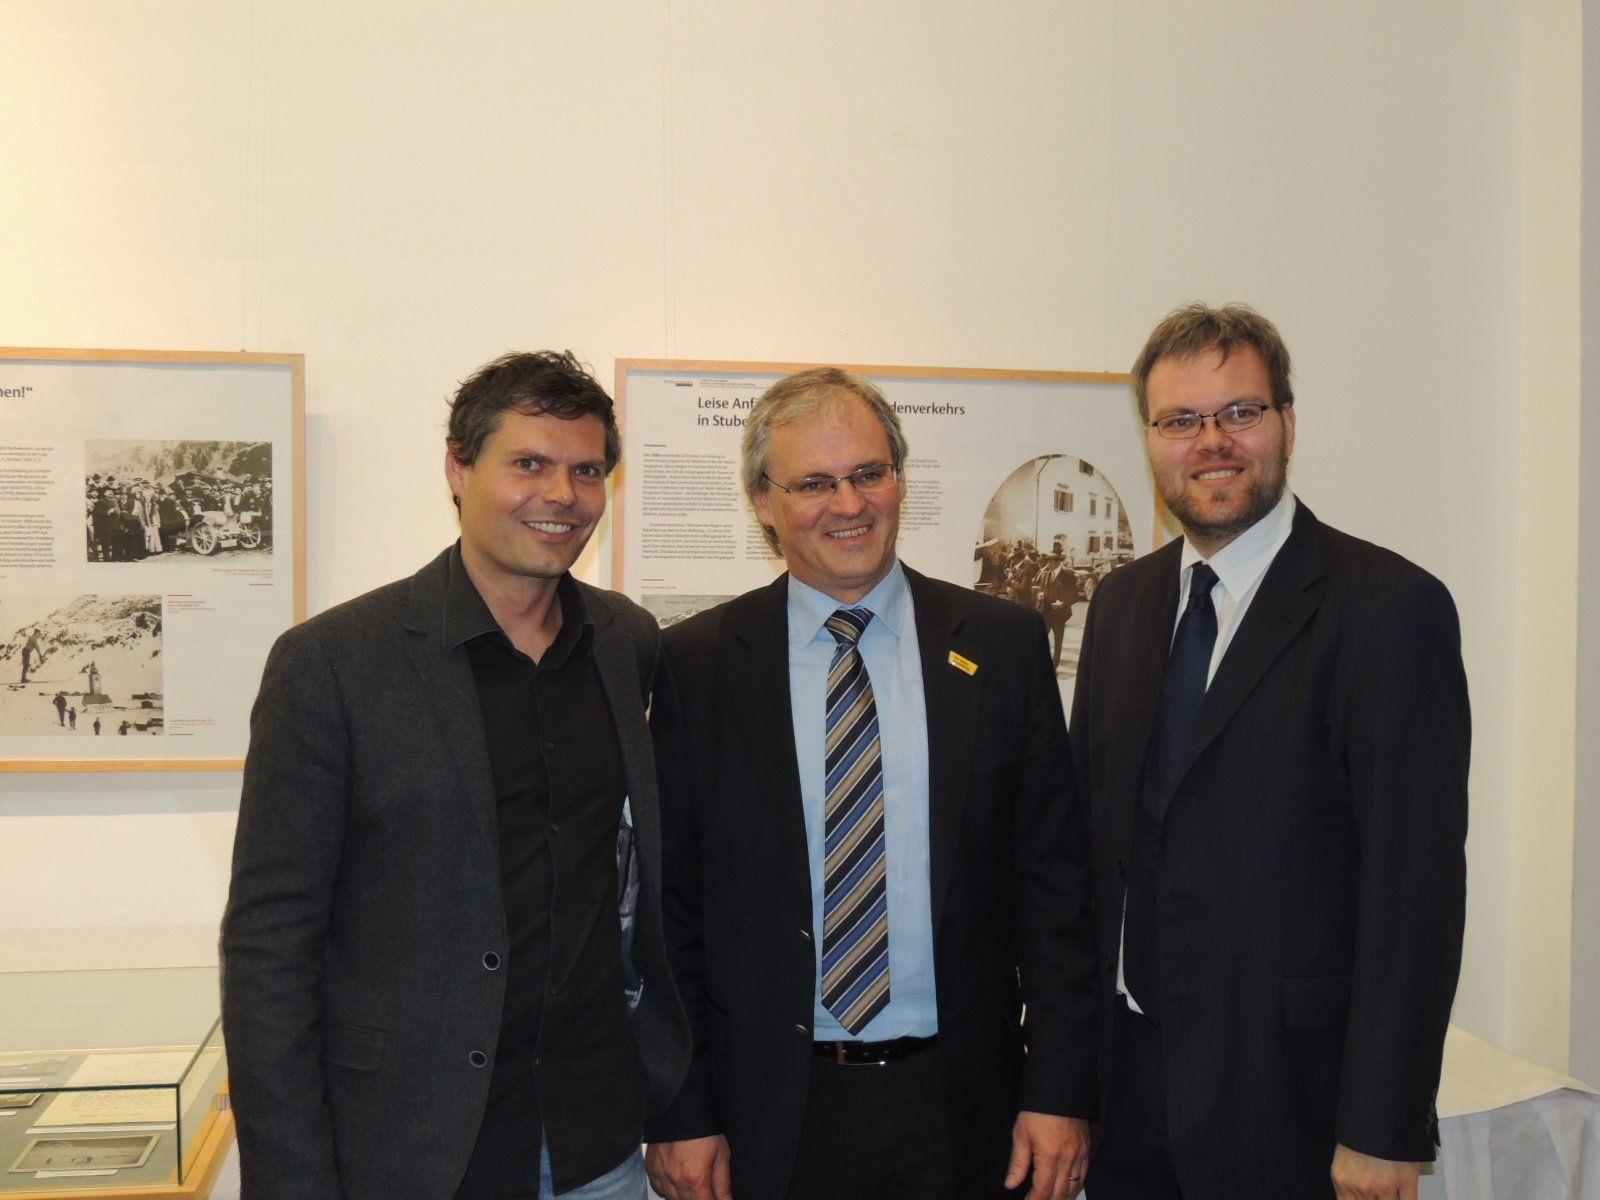 Archivar Oliver Heinzle, LR Sonderegger und Dr. Andreas Brugger